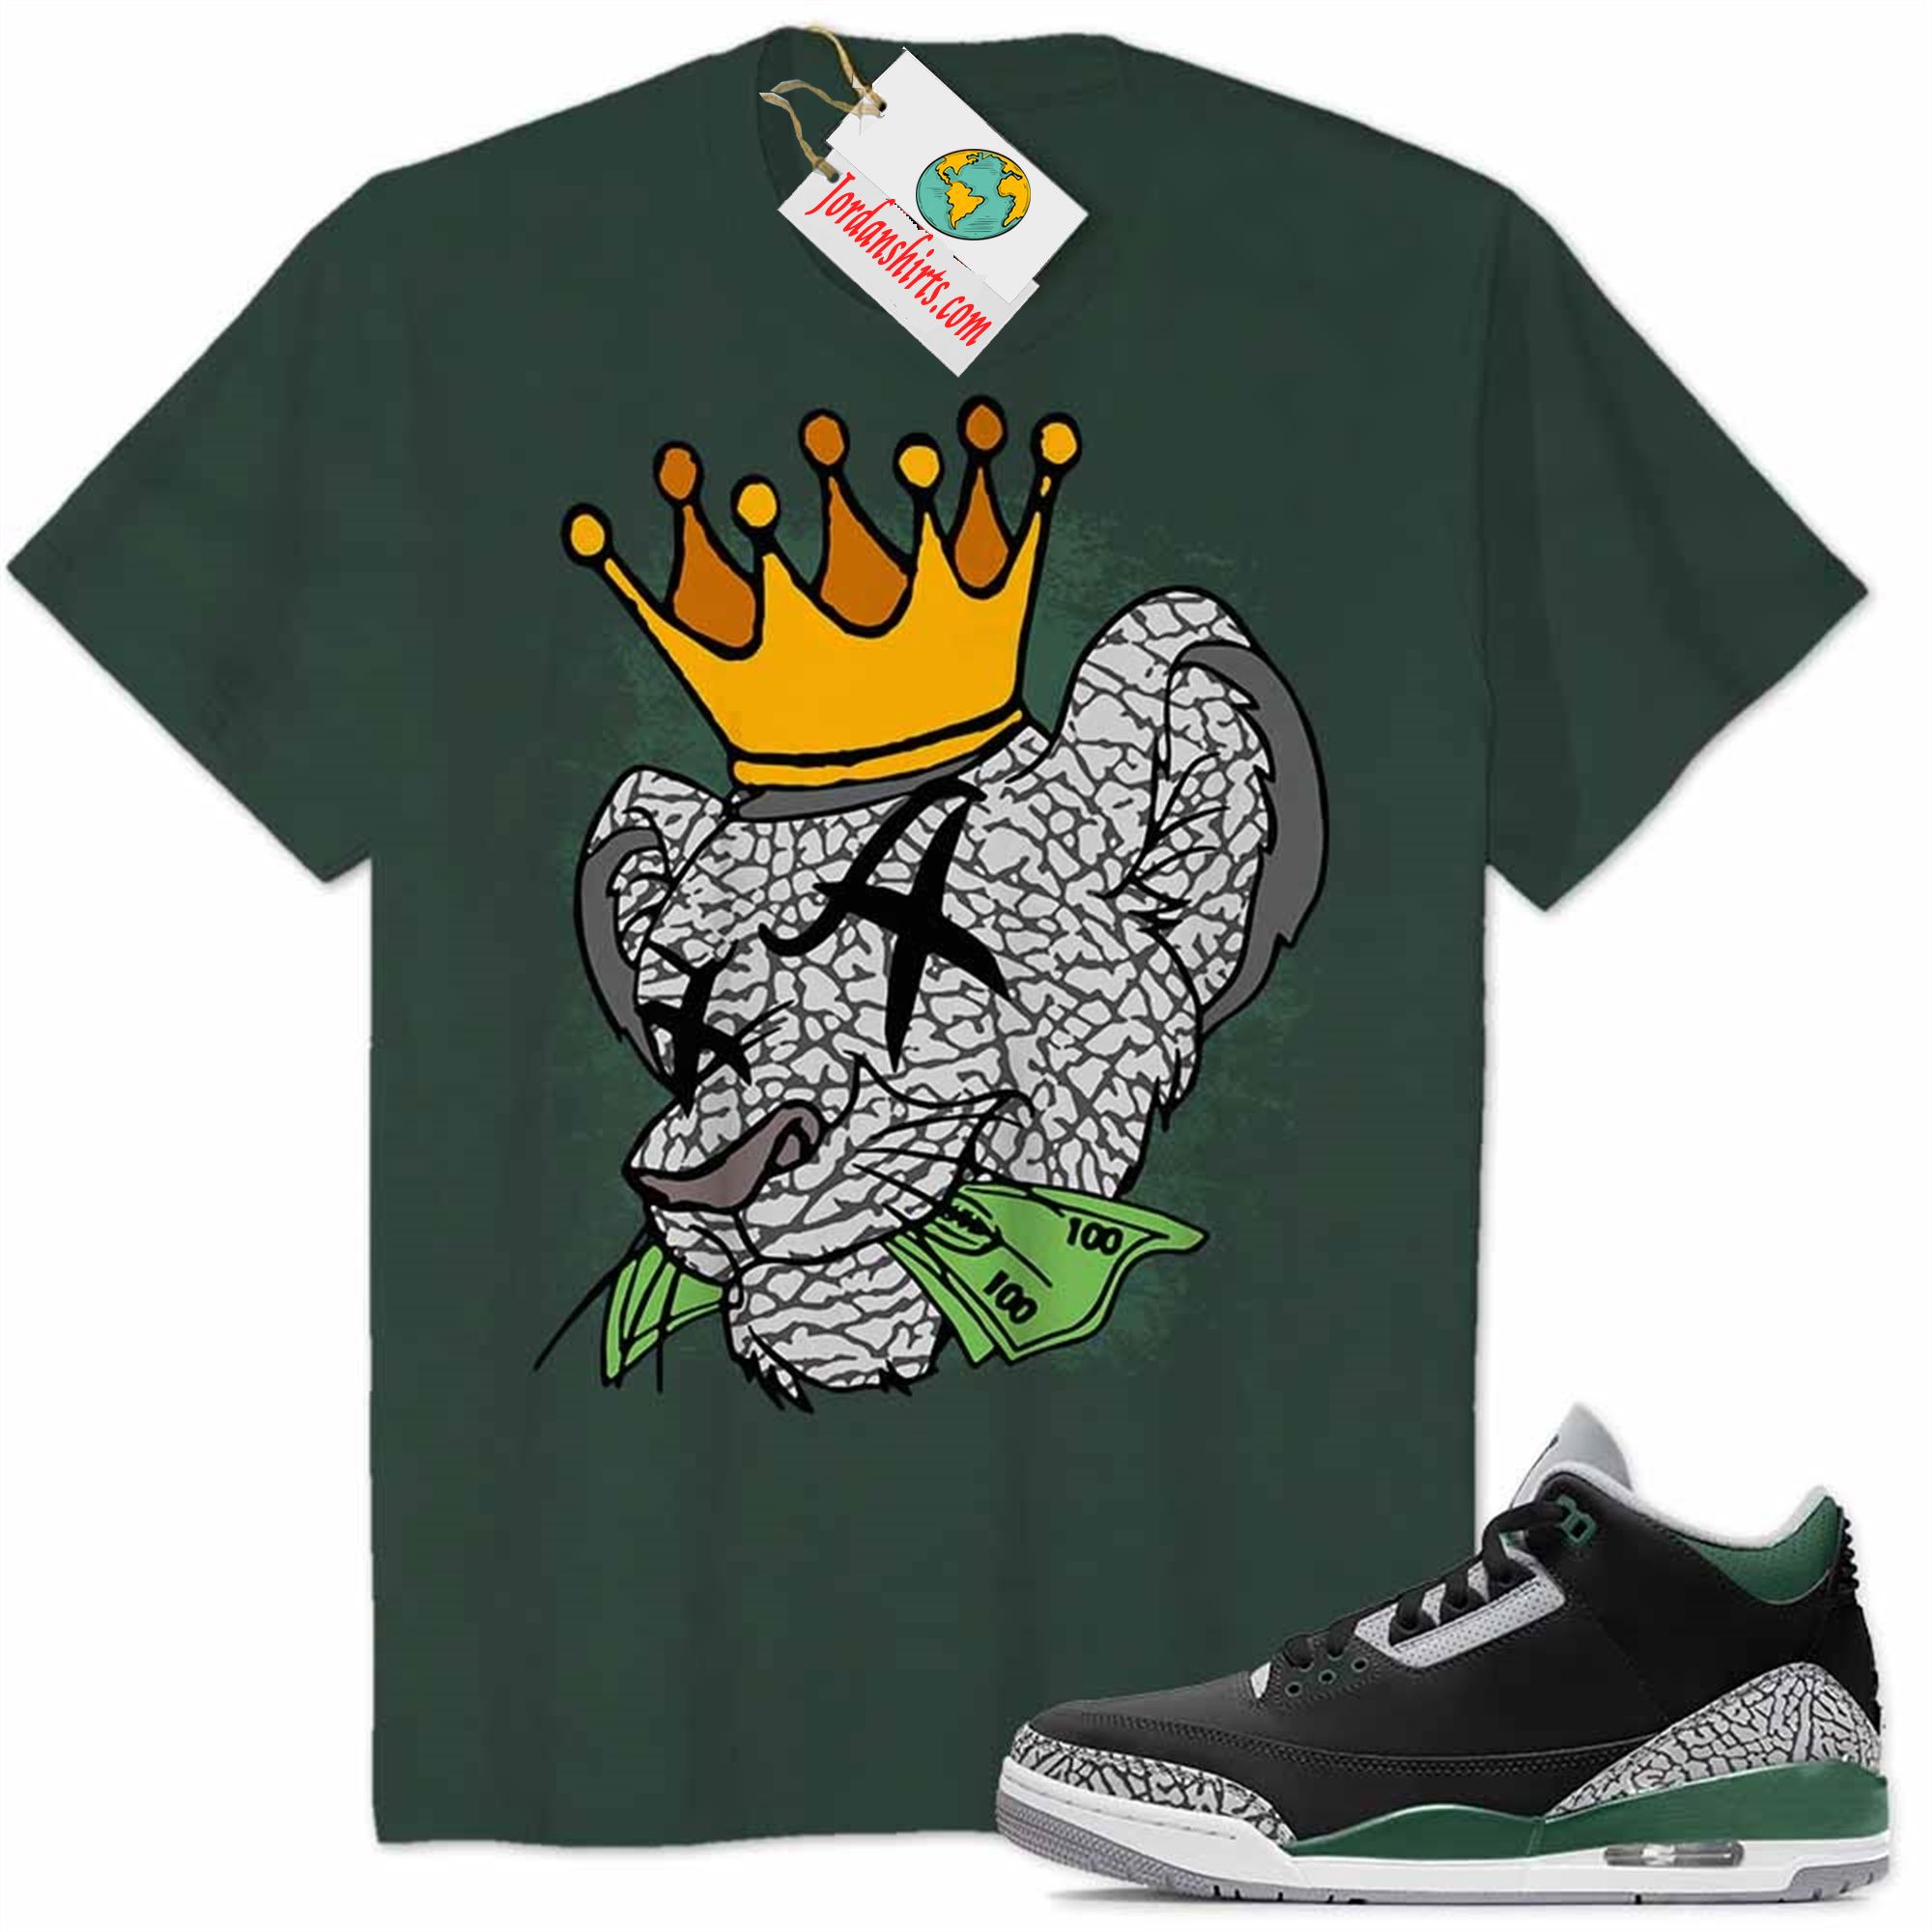 Jordan 3 Shirt, Simba Lion King With Crown Money Forest Air Jordan 3 Pine Green 3s Size Up To 5xl